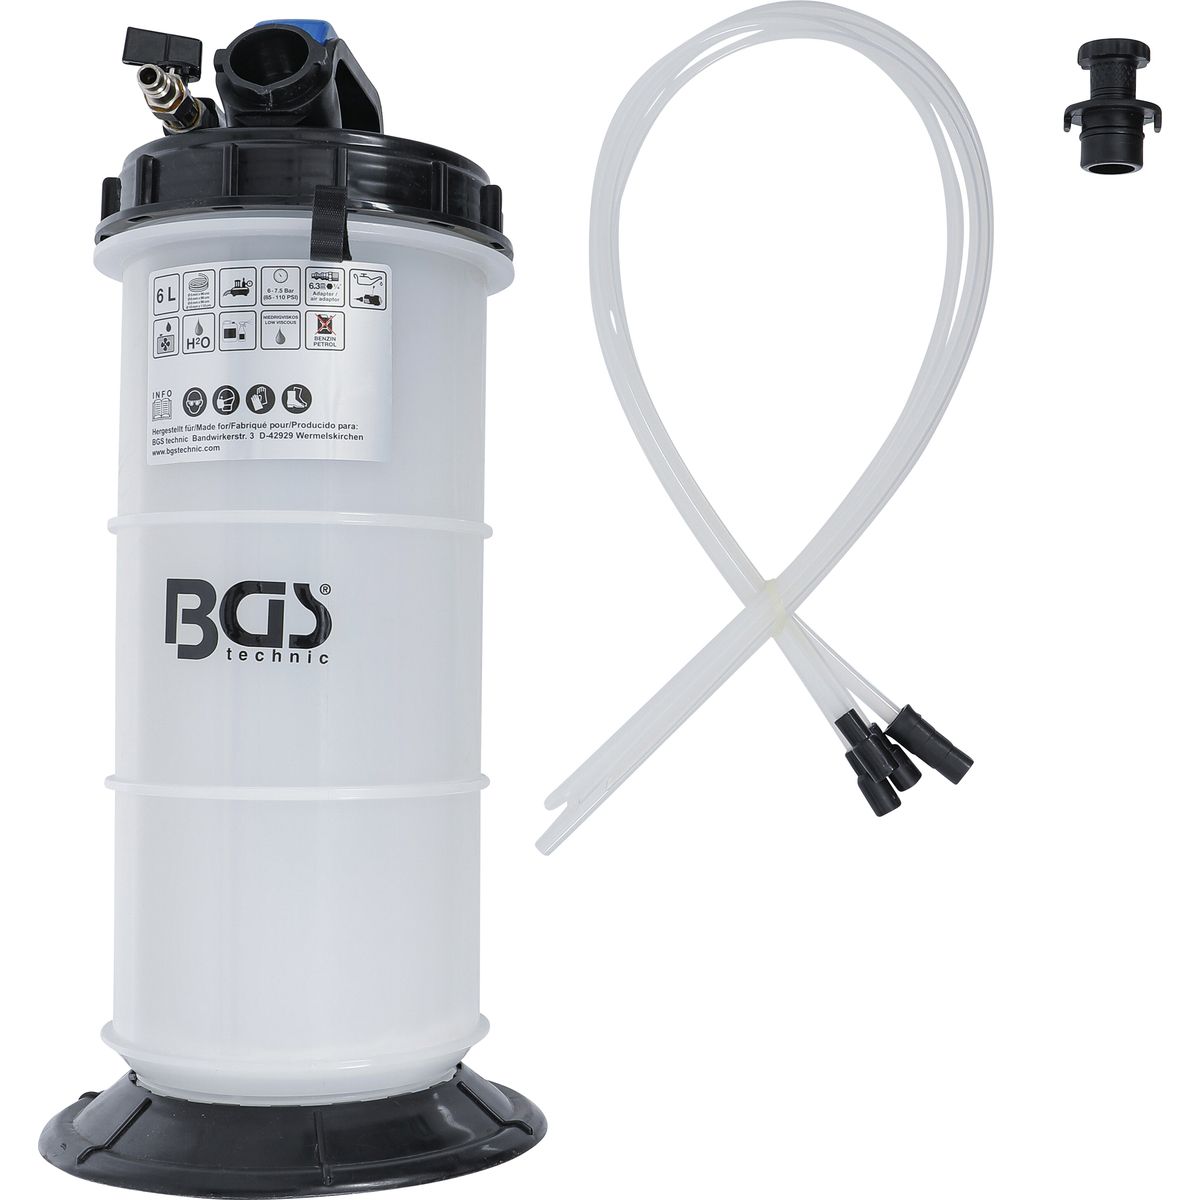 Vacuum Extraction Pump | pneumatic | 6 l